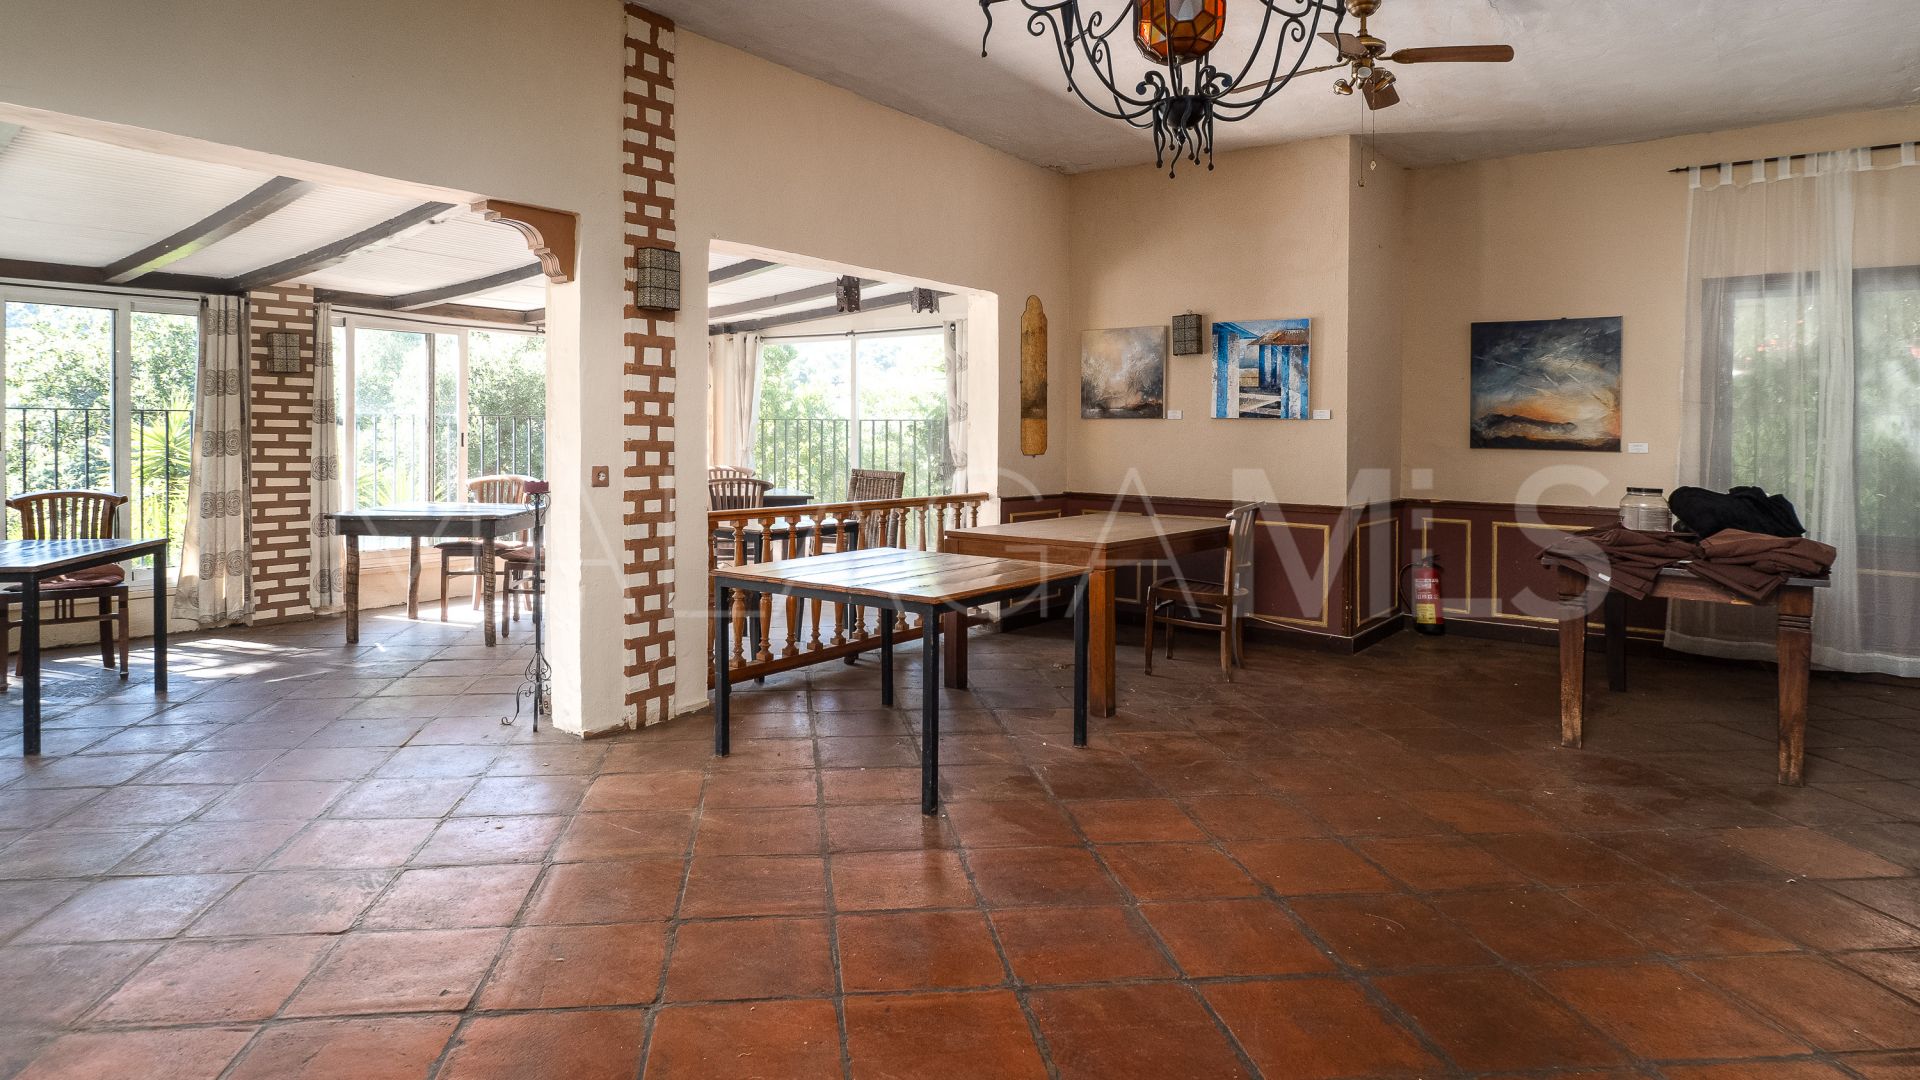 Restaurante for sale in Casares Montaña with 3 bedrooms